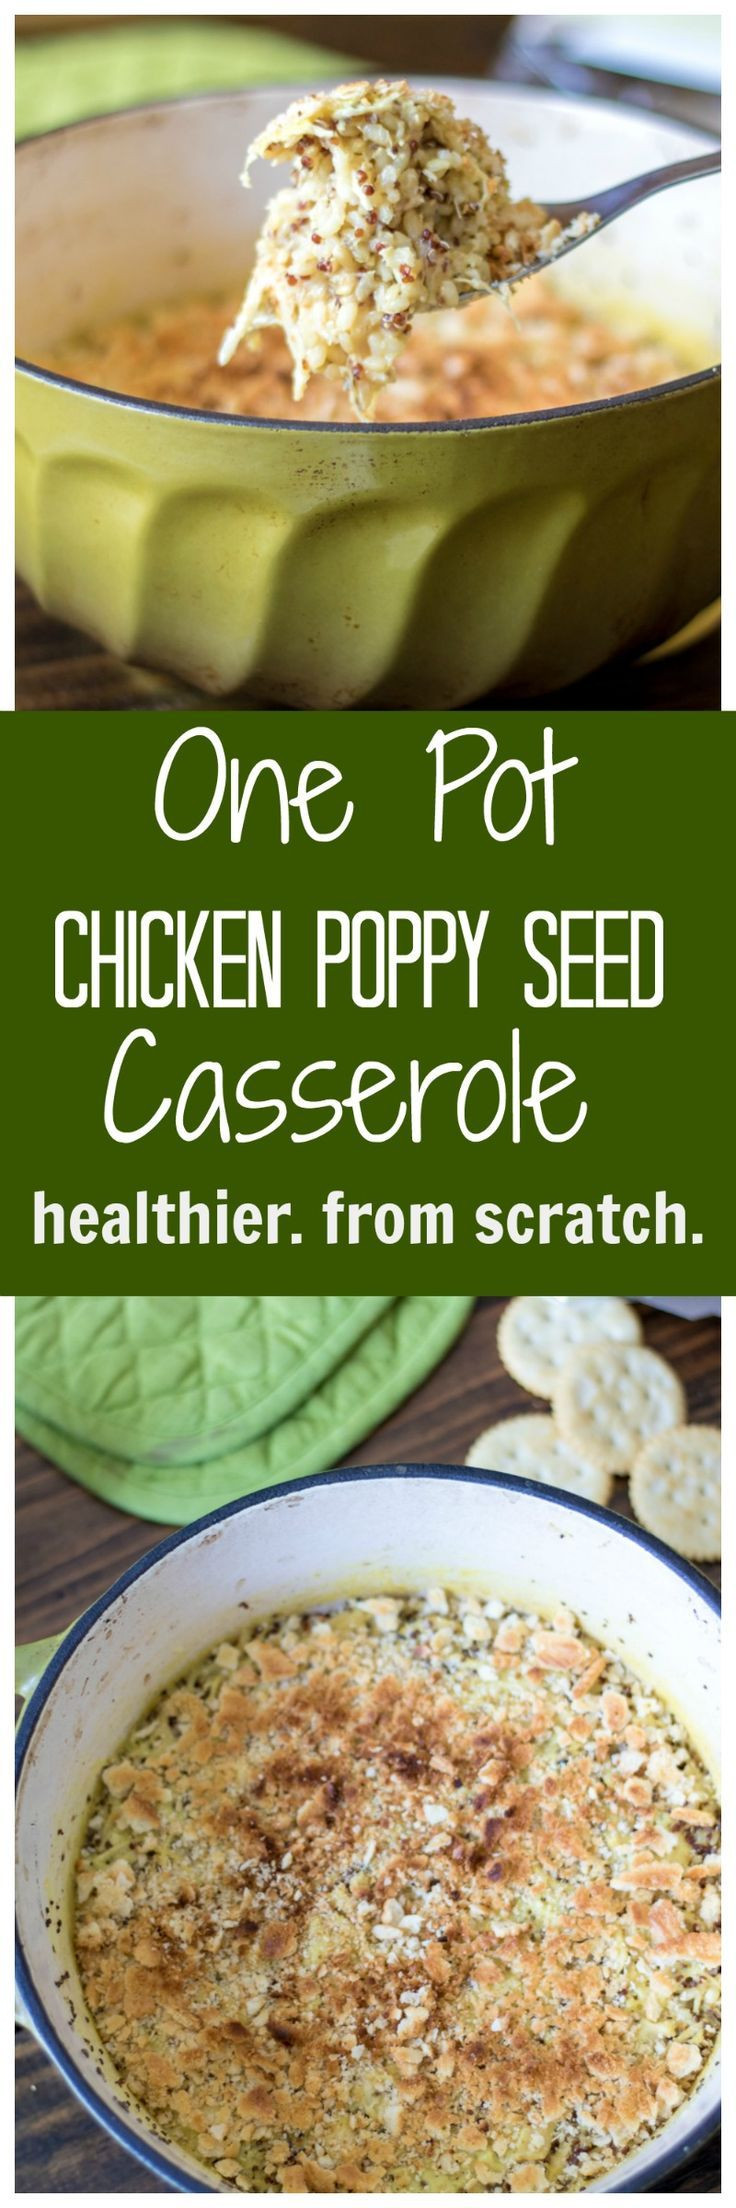 Leftover Rotisserie Chicken Casserole Recipes
 Best 25 Leftover rotisserie chicken ideas on Pinterest